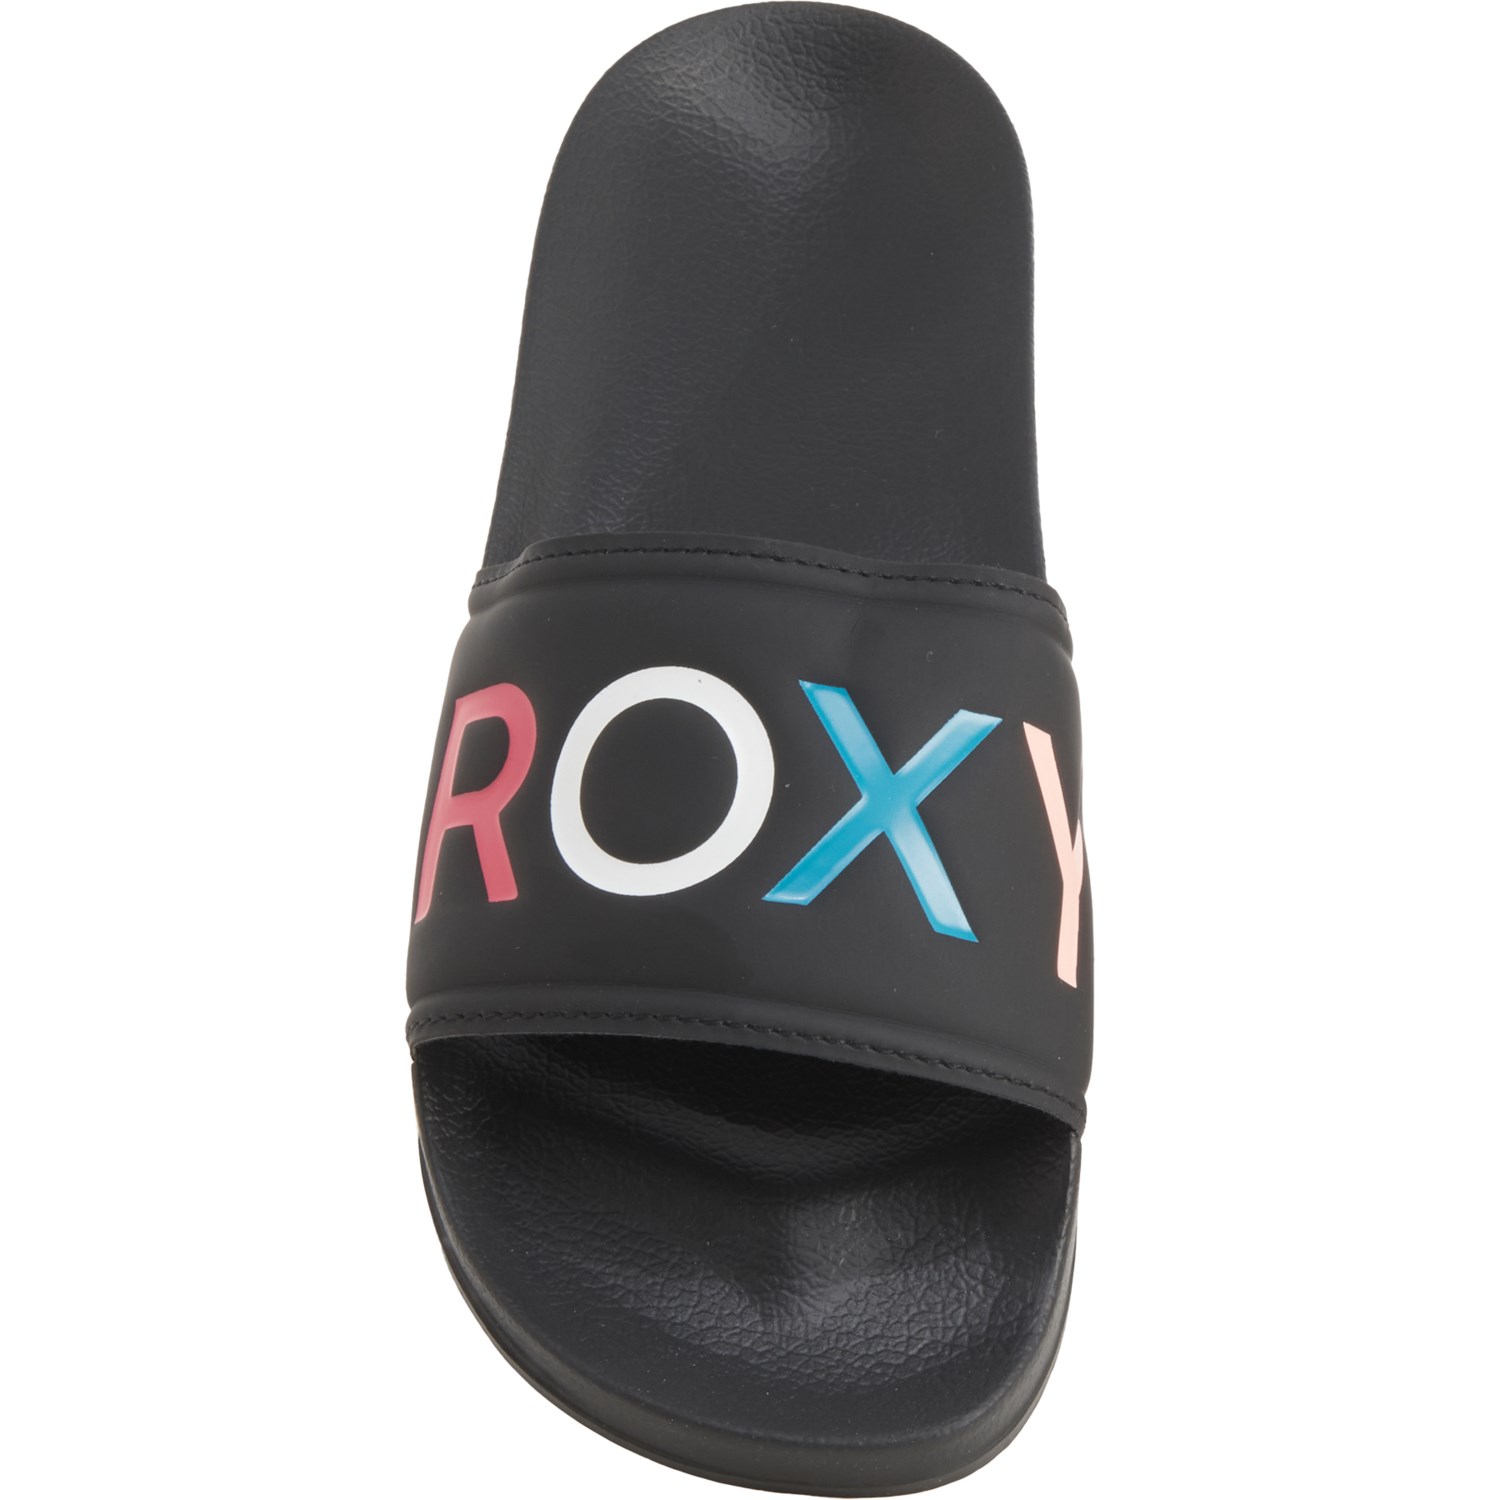 ROXY Women's Slippy Slide Beach & Pool Shoes